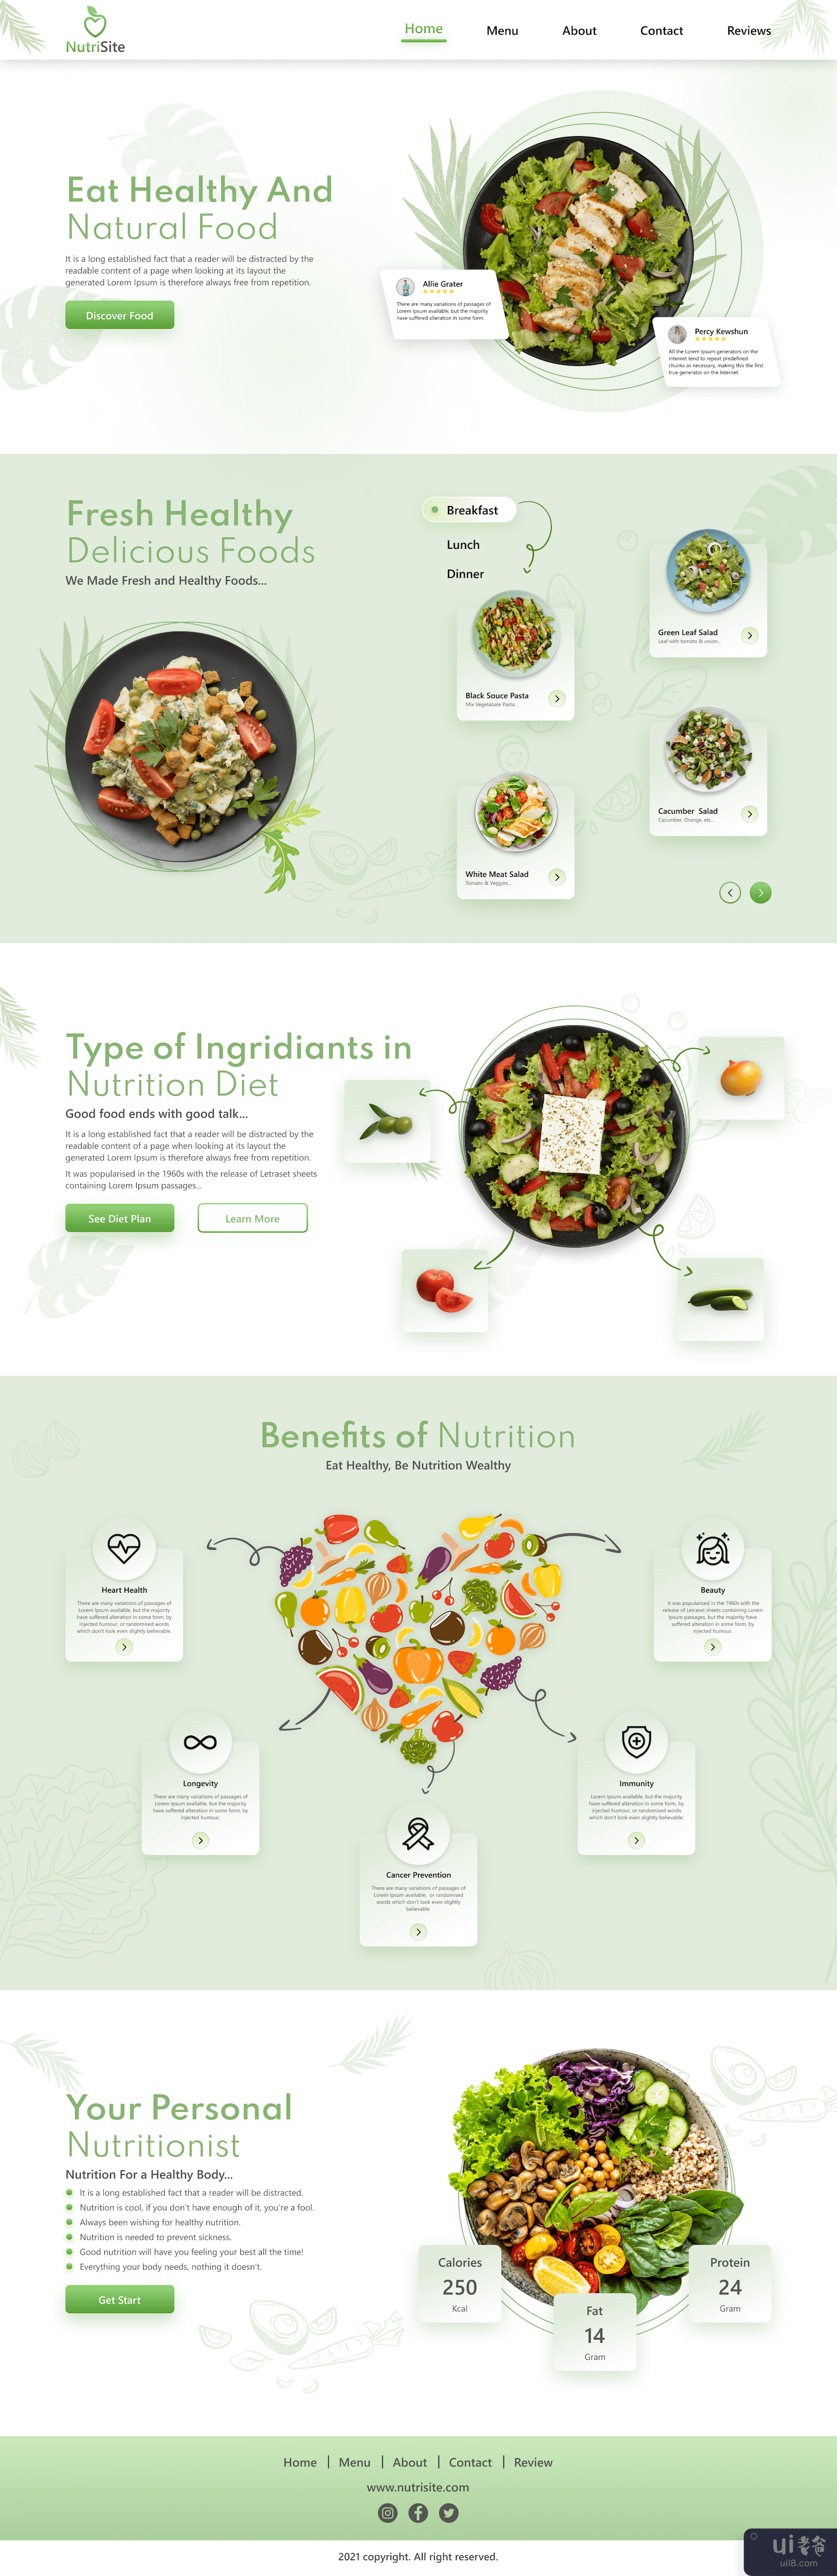 营养登陆页面设计模板(Nutritions Landing Page Design Template)插图